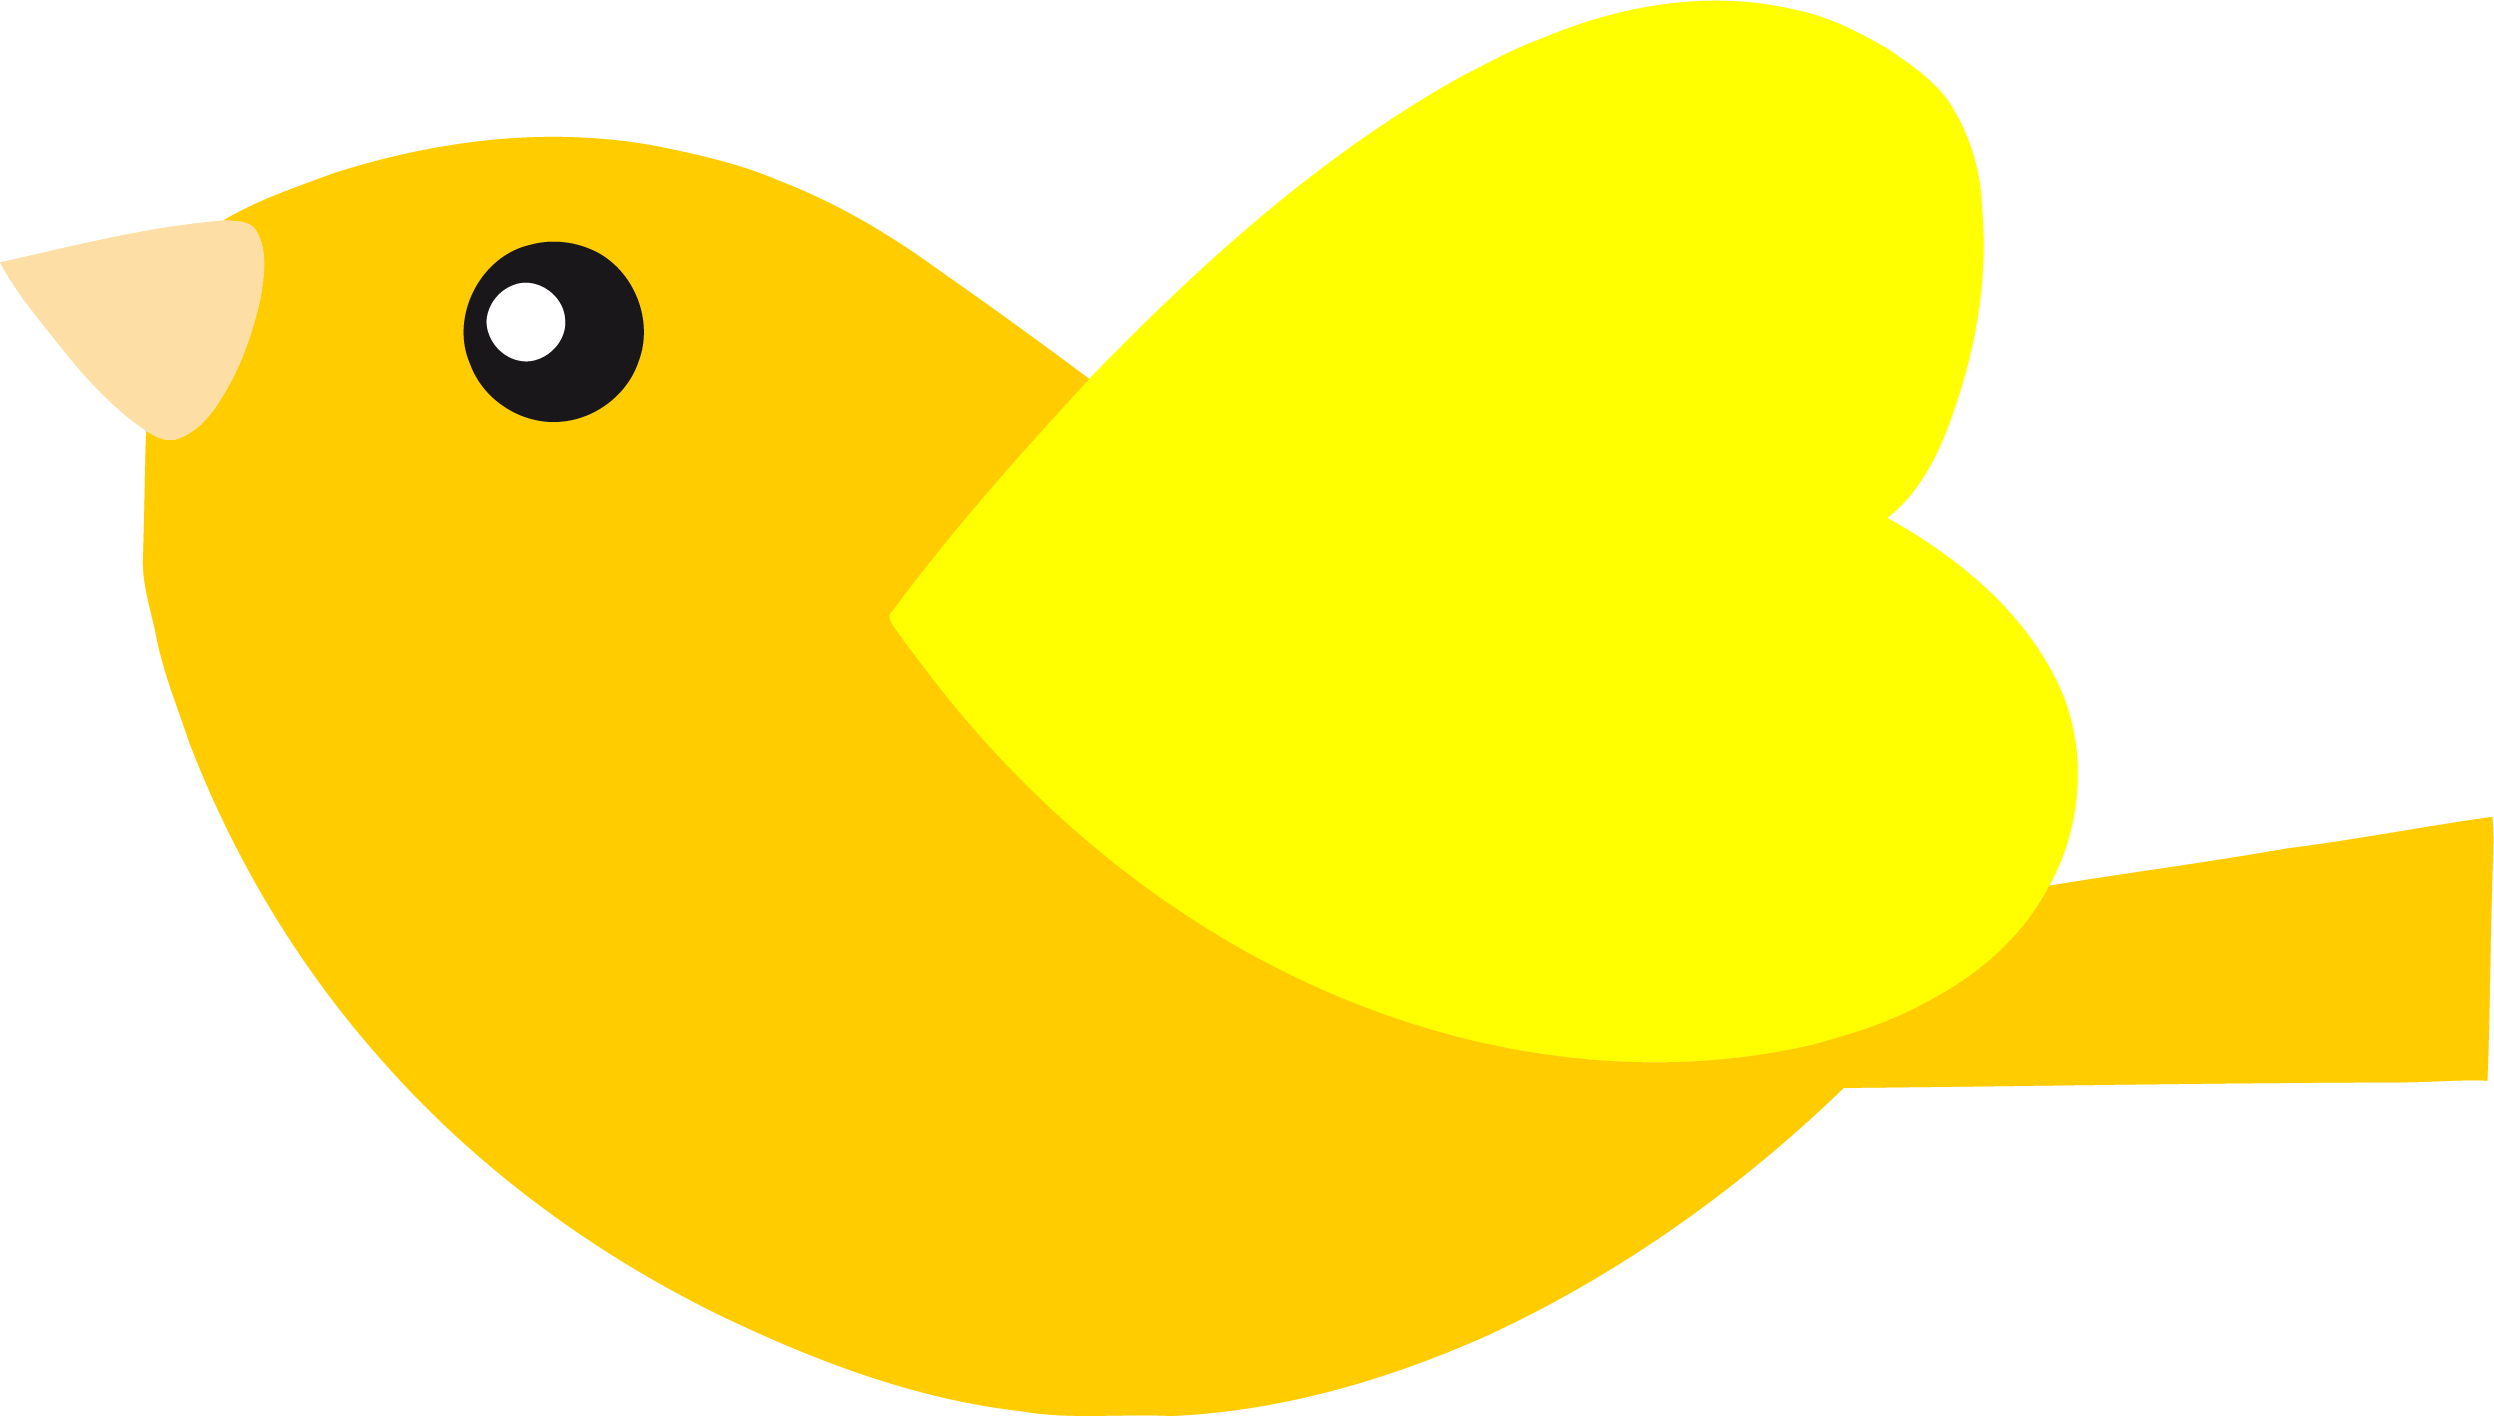 clipart bird yellow